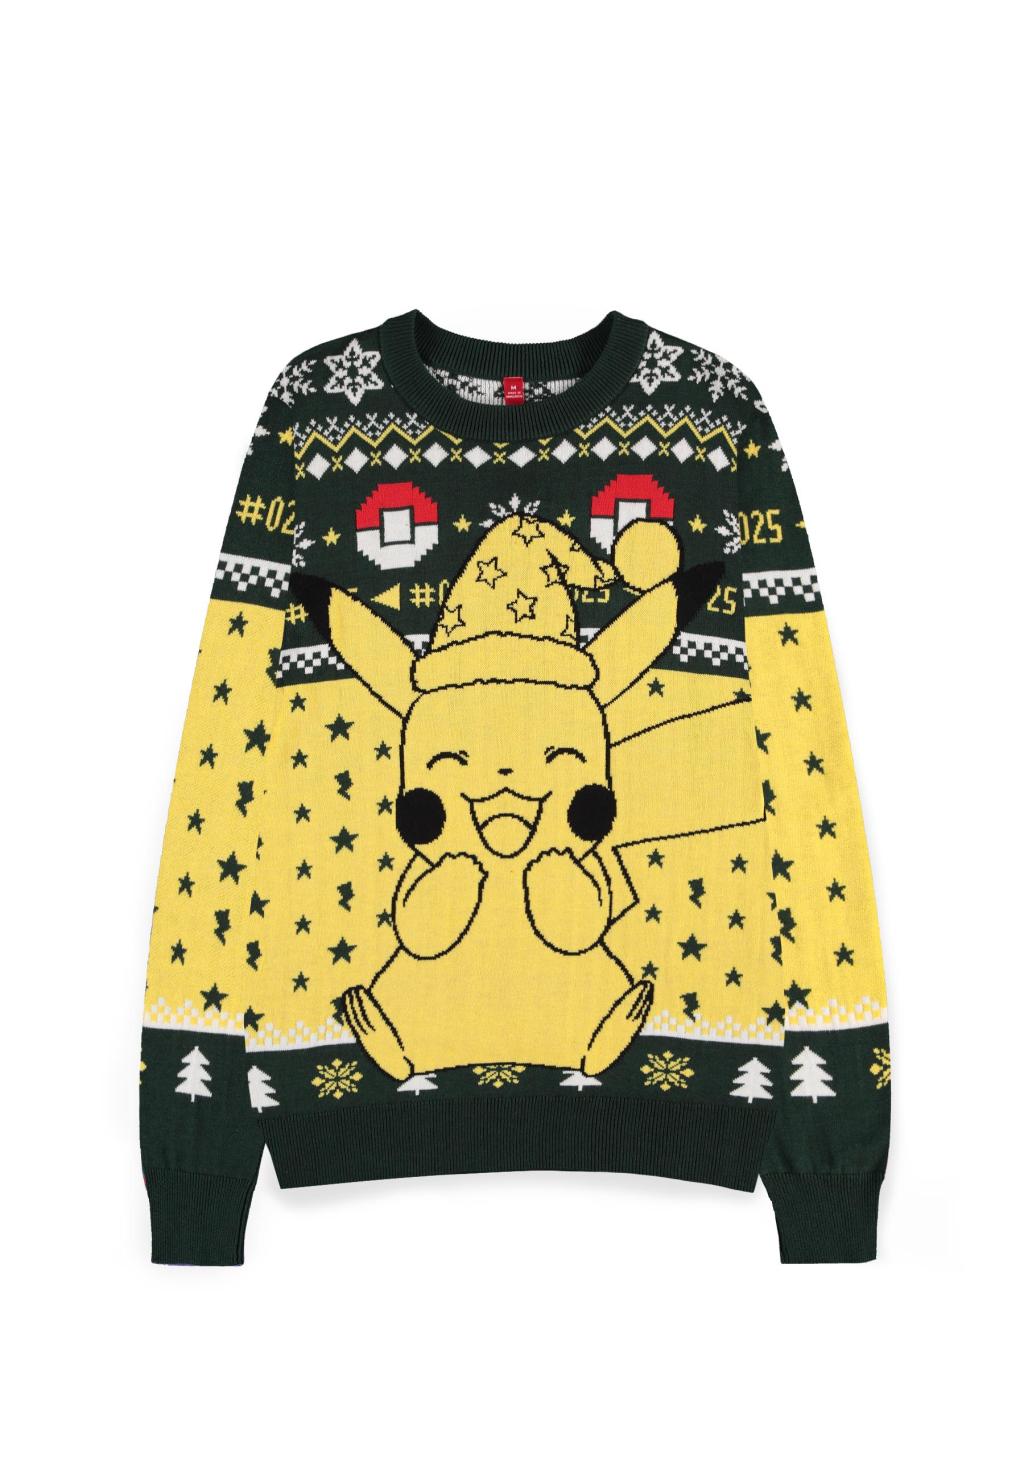 POKEMON - Happy Pikachu - Christmas Jumper (2XL)